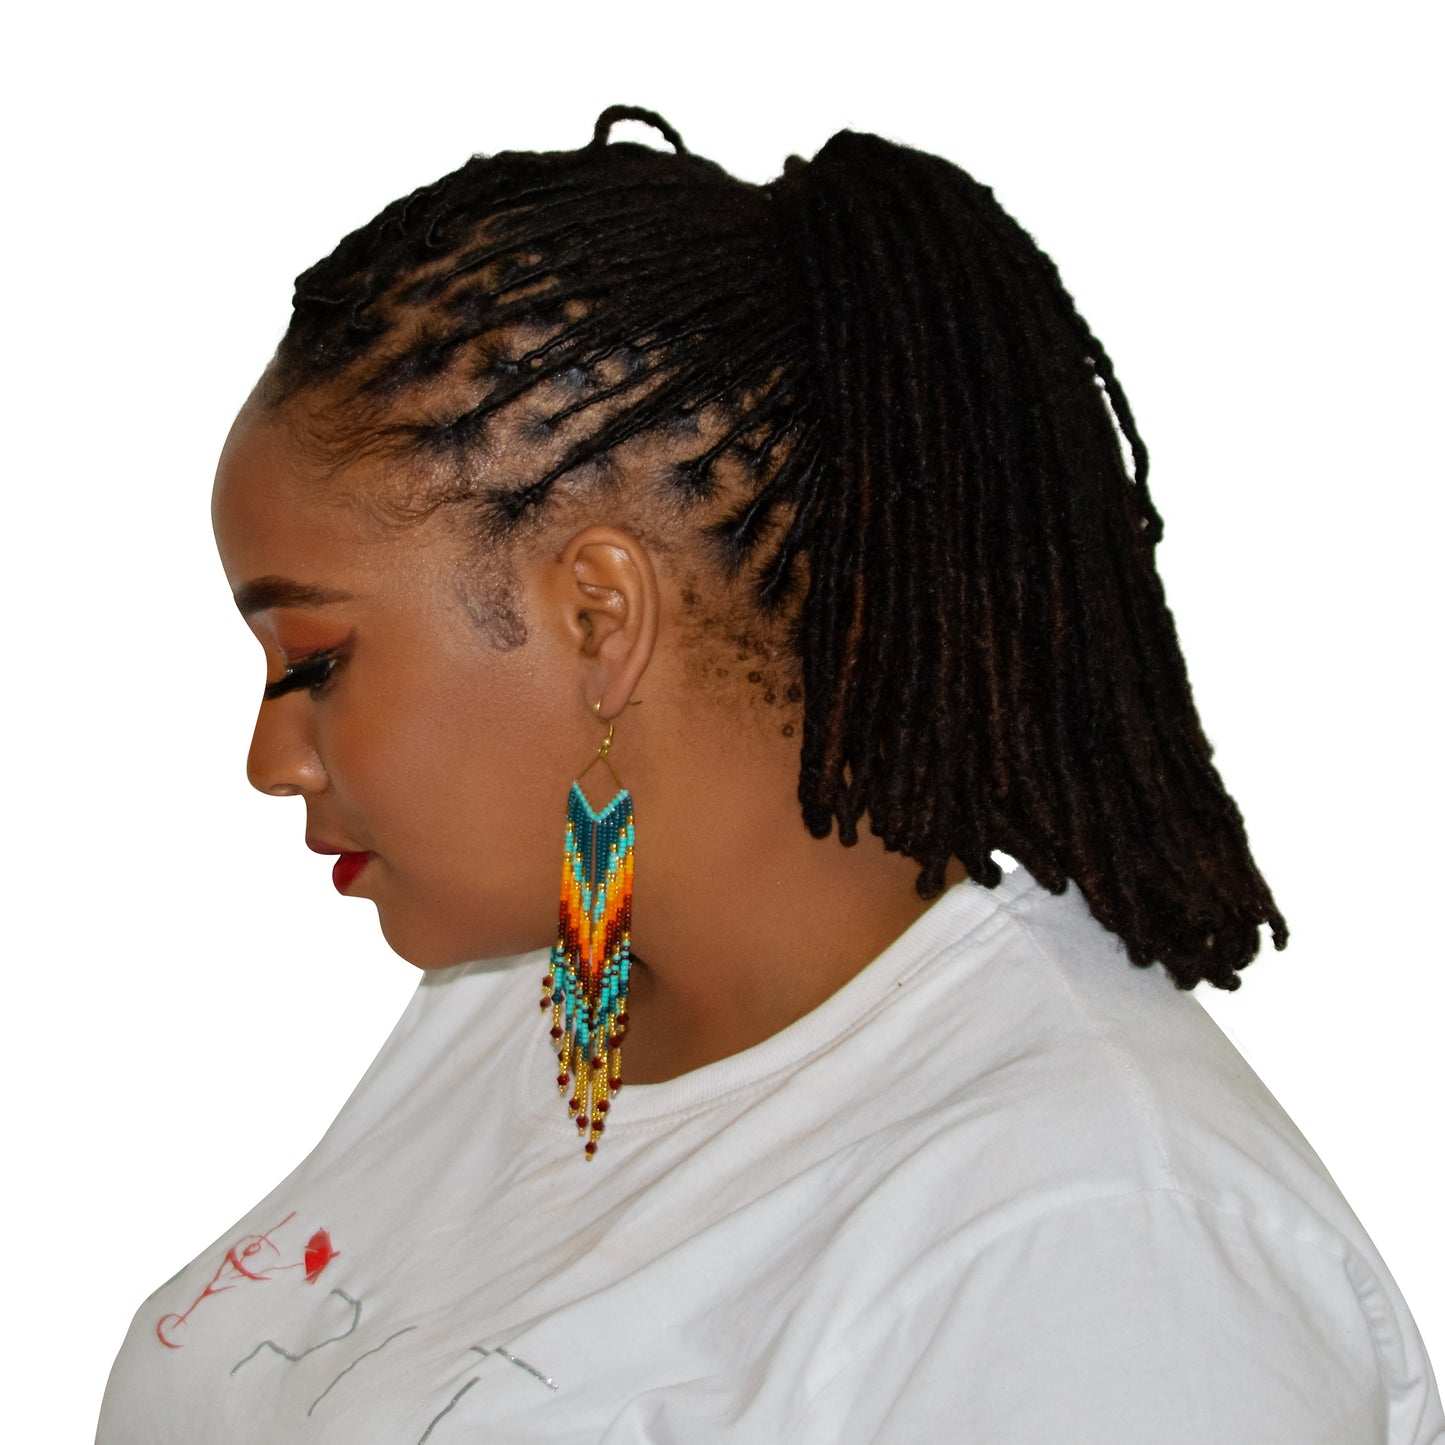 Angela earrings Beaded ombre Bohemian fringe earrings Seed bead long natural color palette turquoise orange native dangle earrings